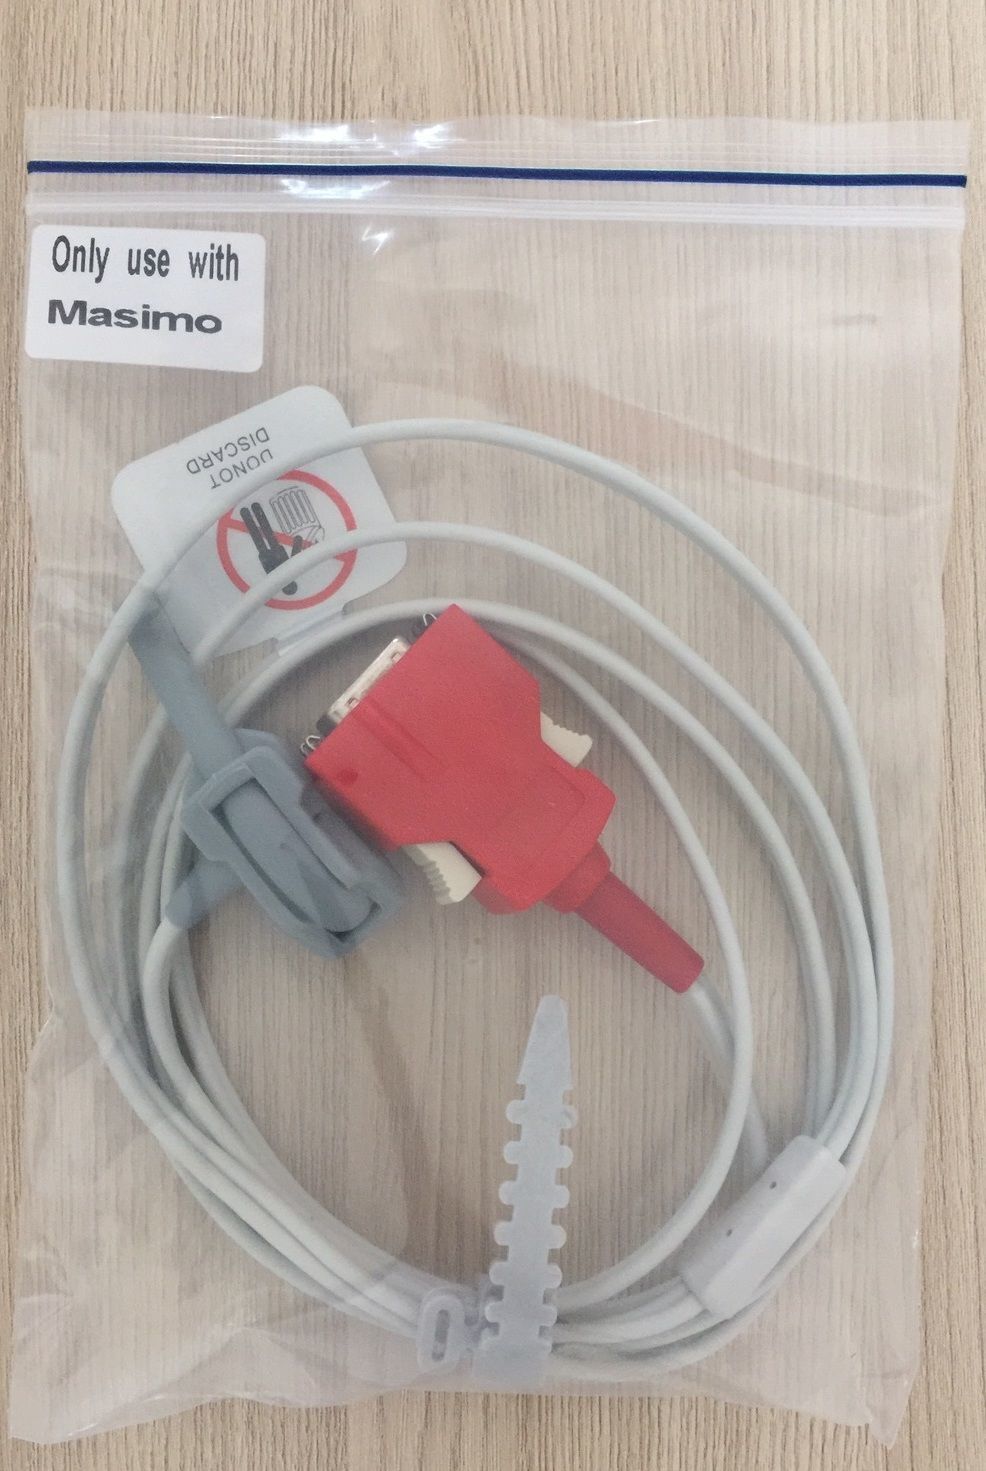 Spo2 Neonate wrap sensor cable for Masimo 20 Pins_สายแซทวัด Spo2 สำหรับทารกแบบมาซิโม 20 พิน